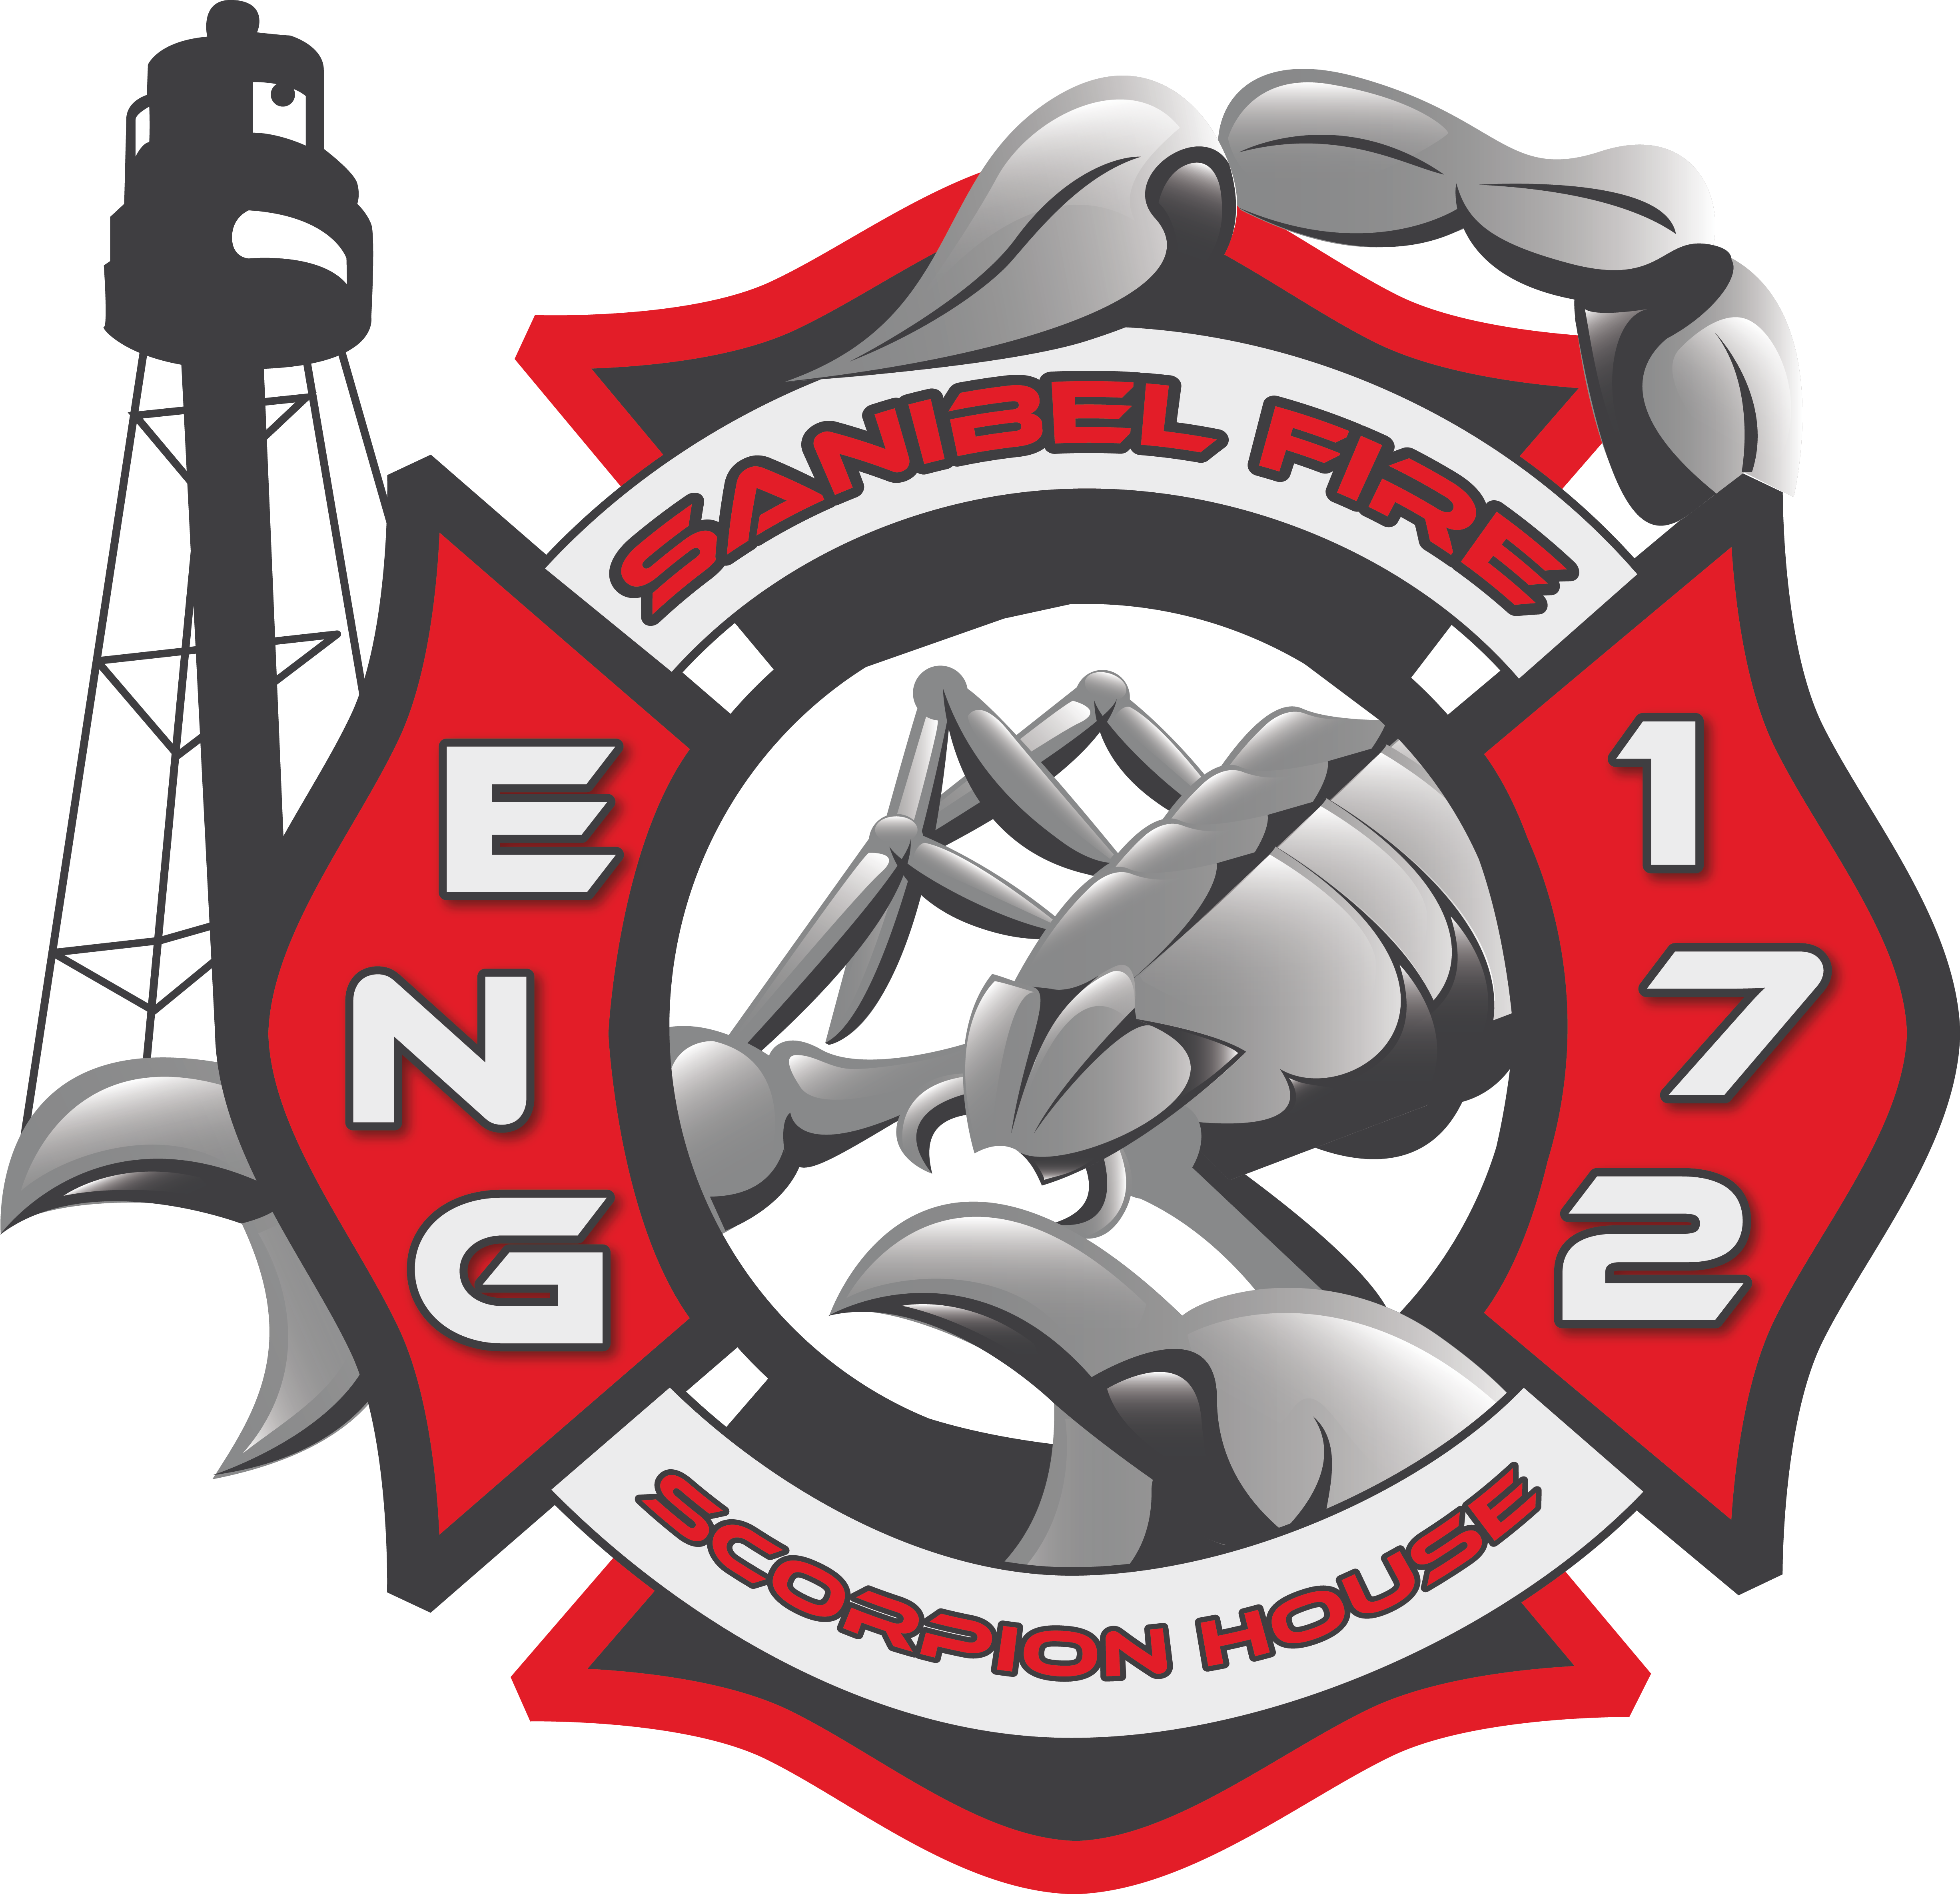 Sanibelfire Final-1 Sanibel Fire L171 - Sanibel Island Fire Department (4902x4736)